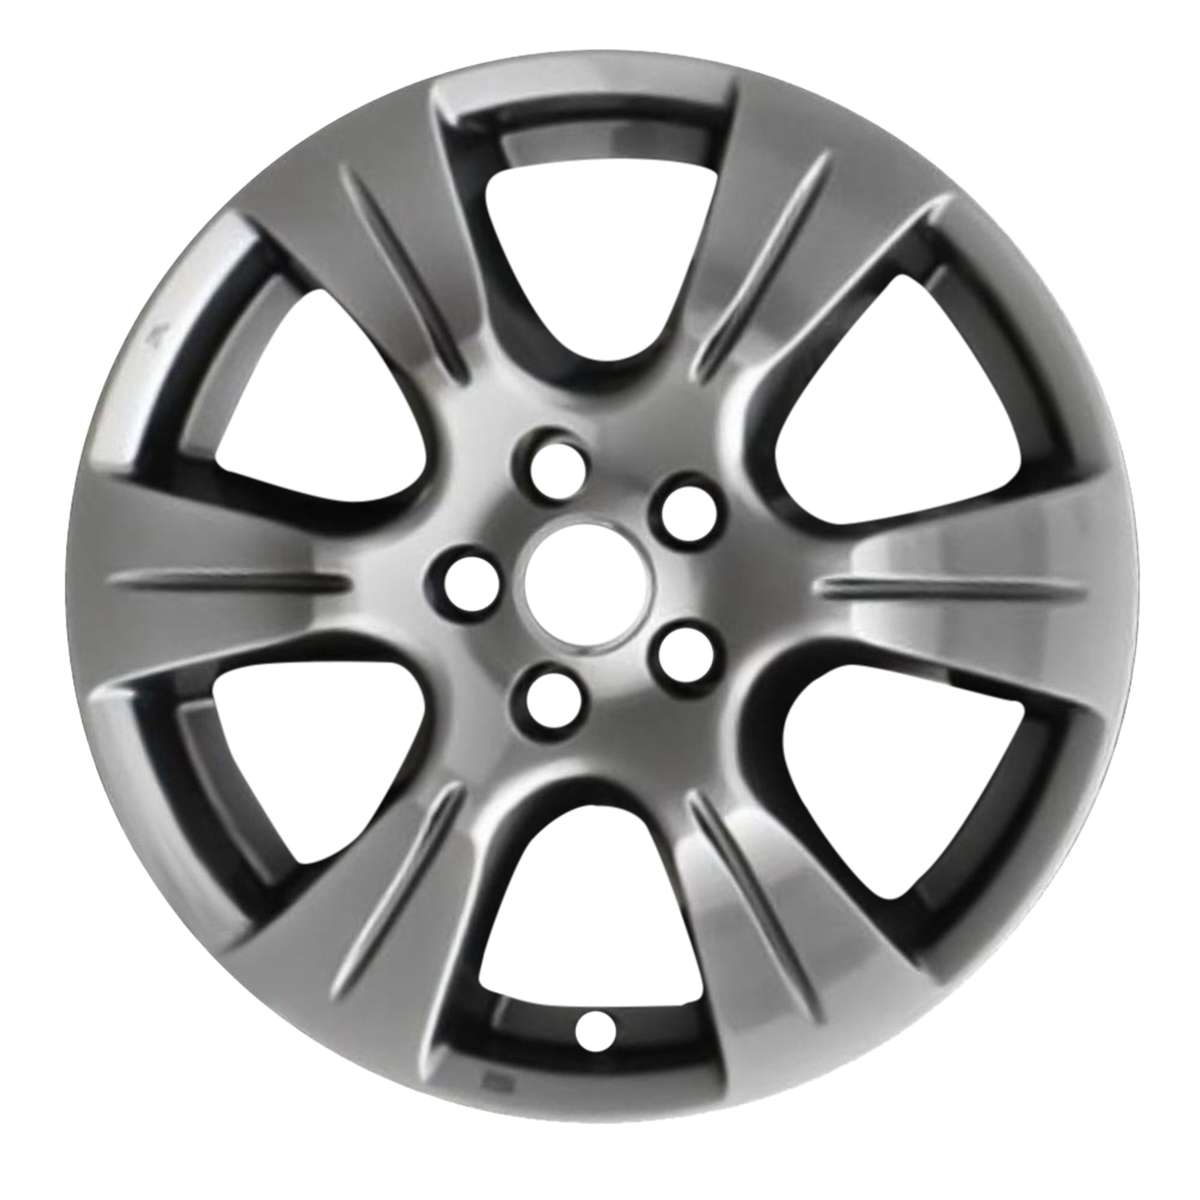 2019 Toyota Sienna 18" OEM Wheel Rim W75237C